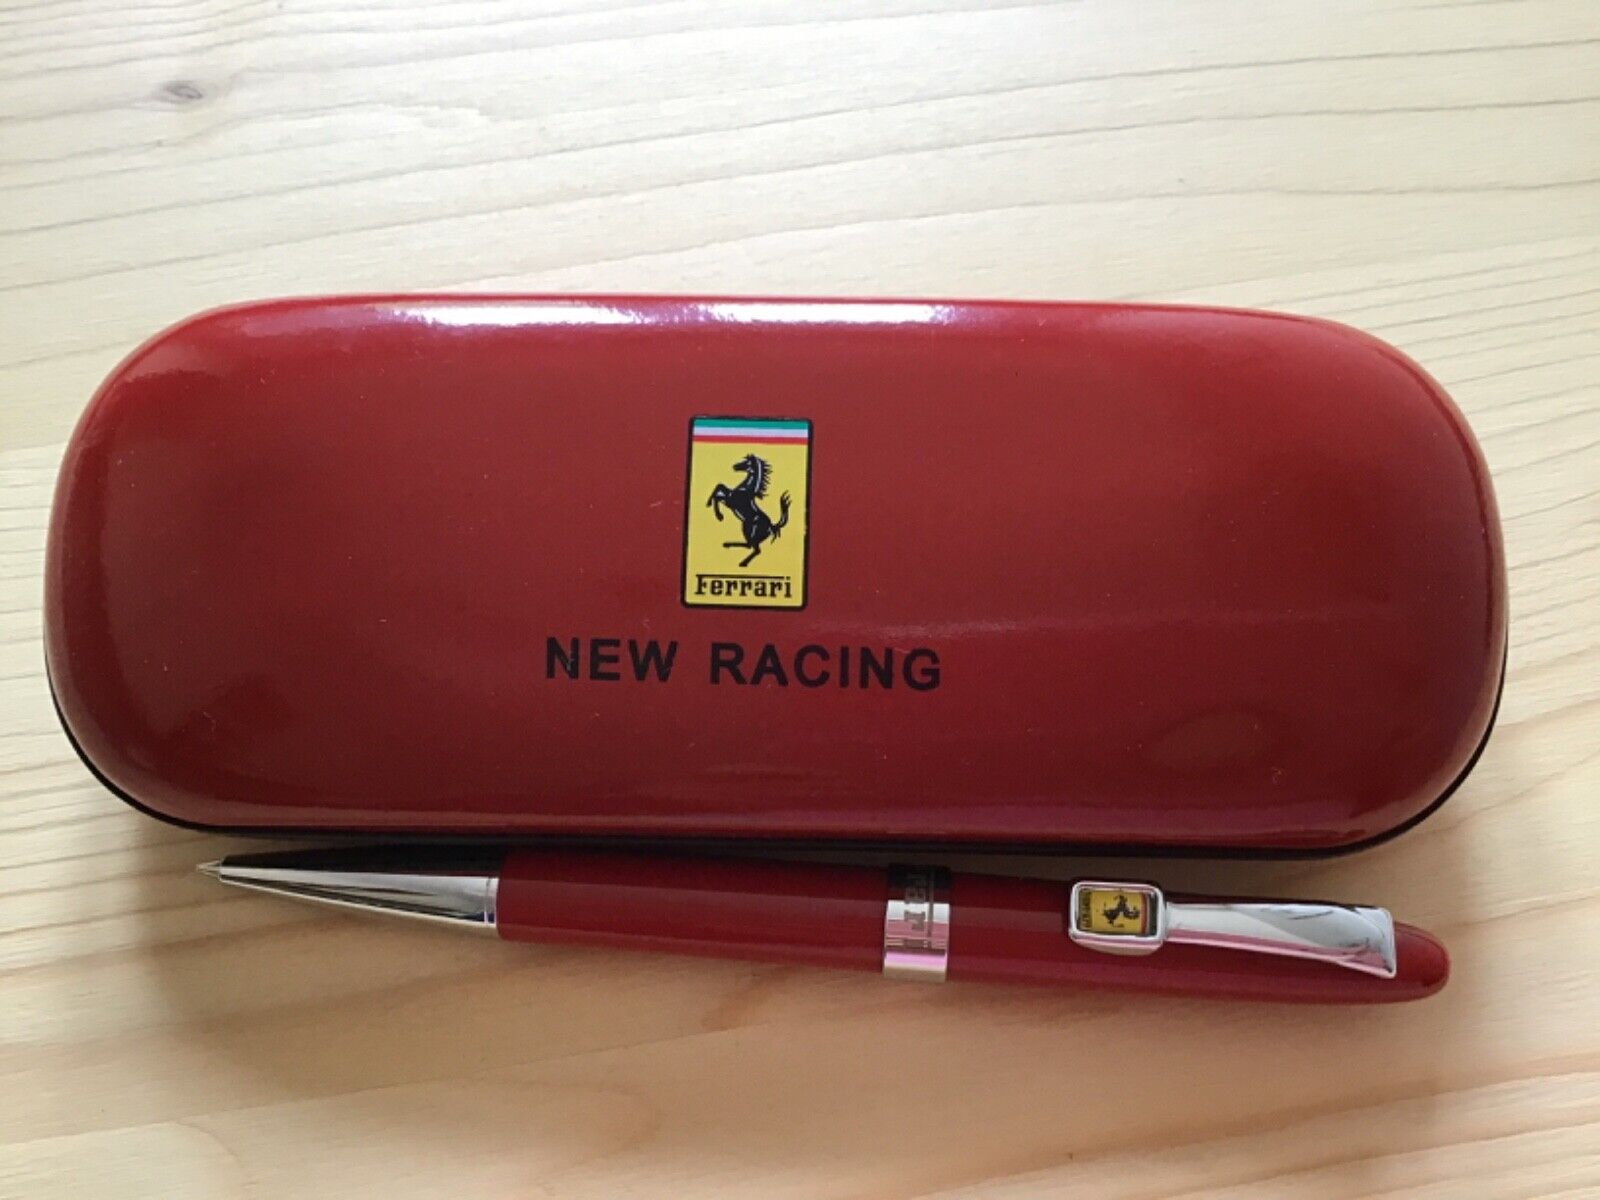 Vintage rare Ferrari New Racing Ballpoint Pen “rare”  by Artena collectors item